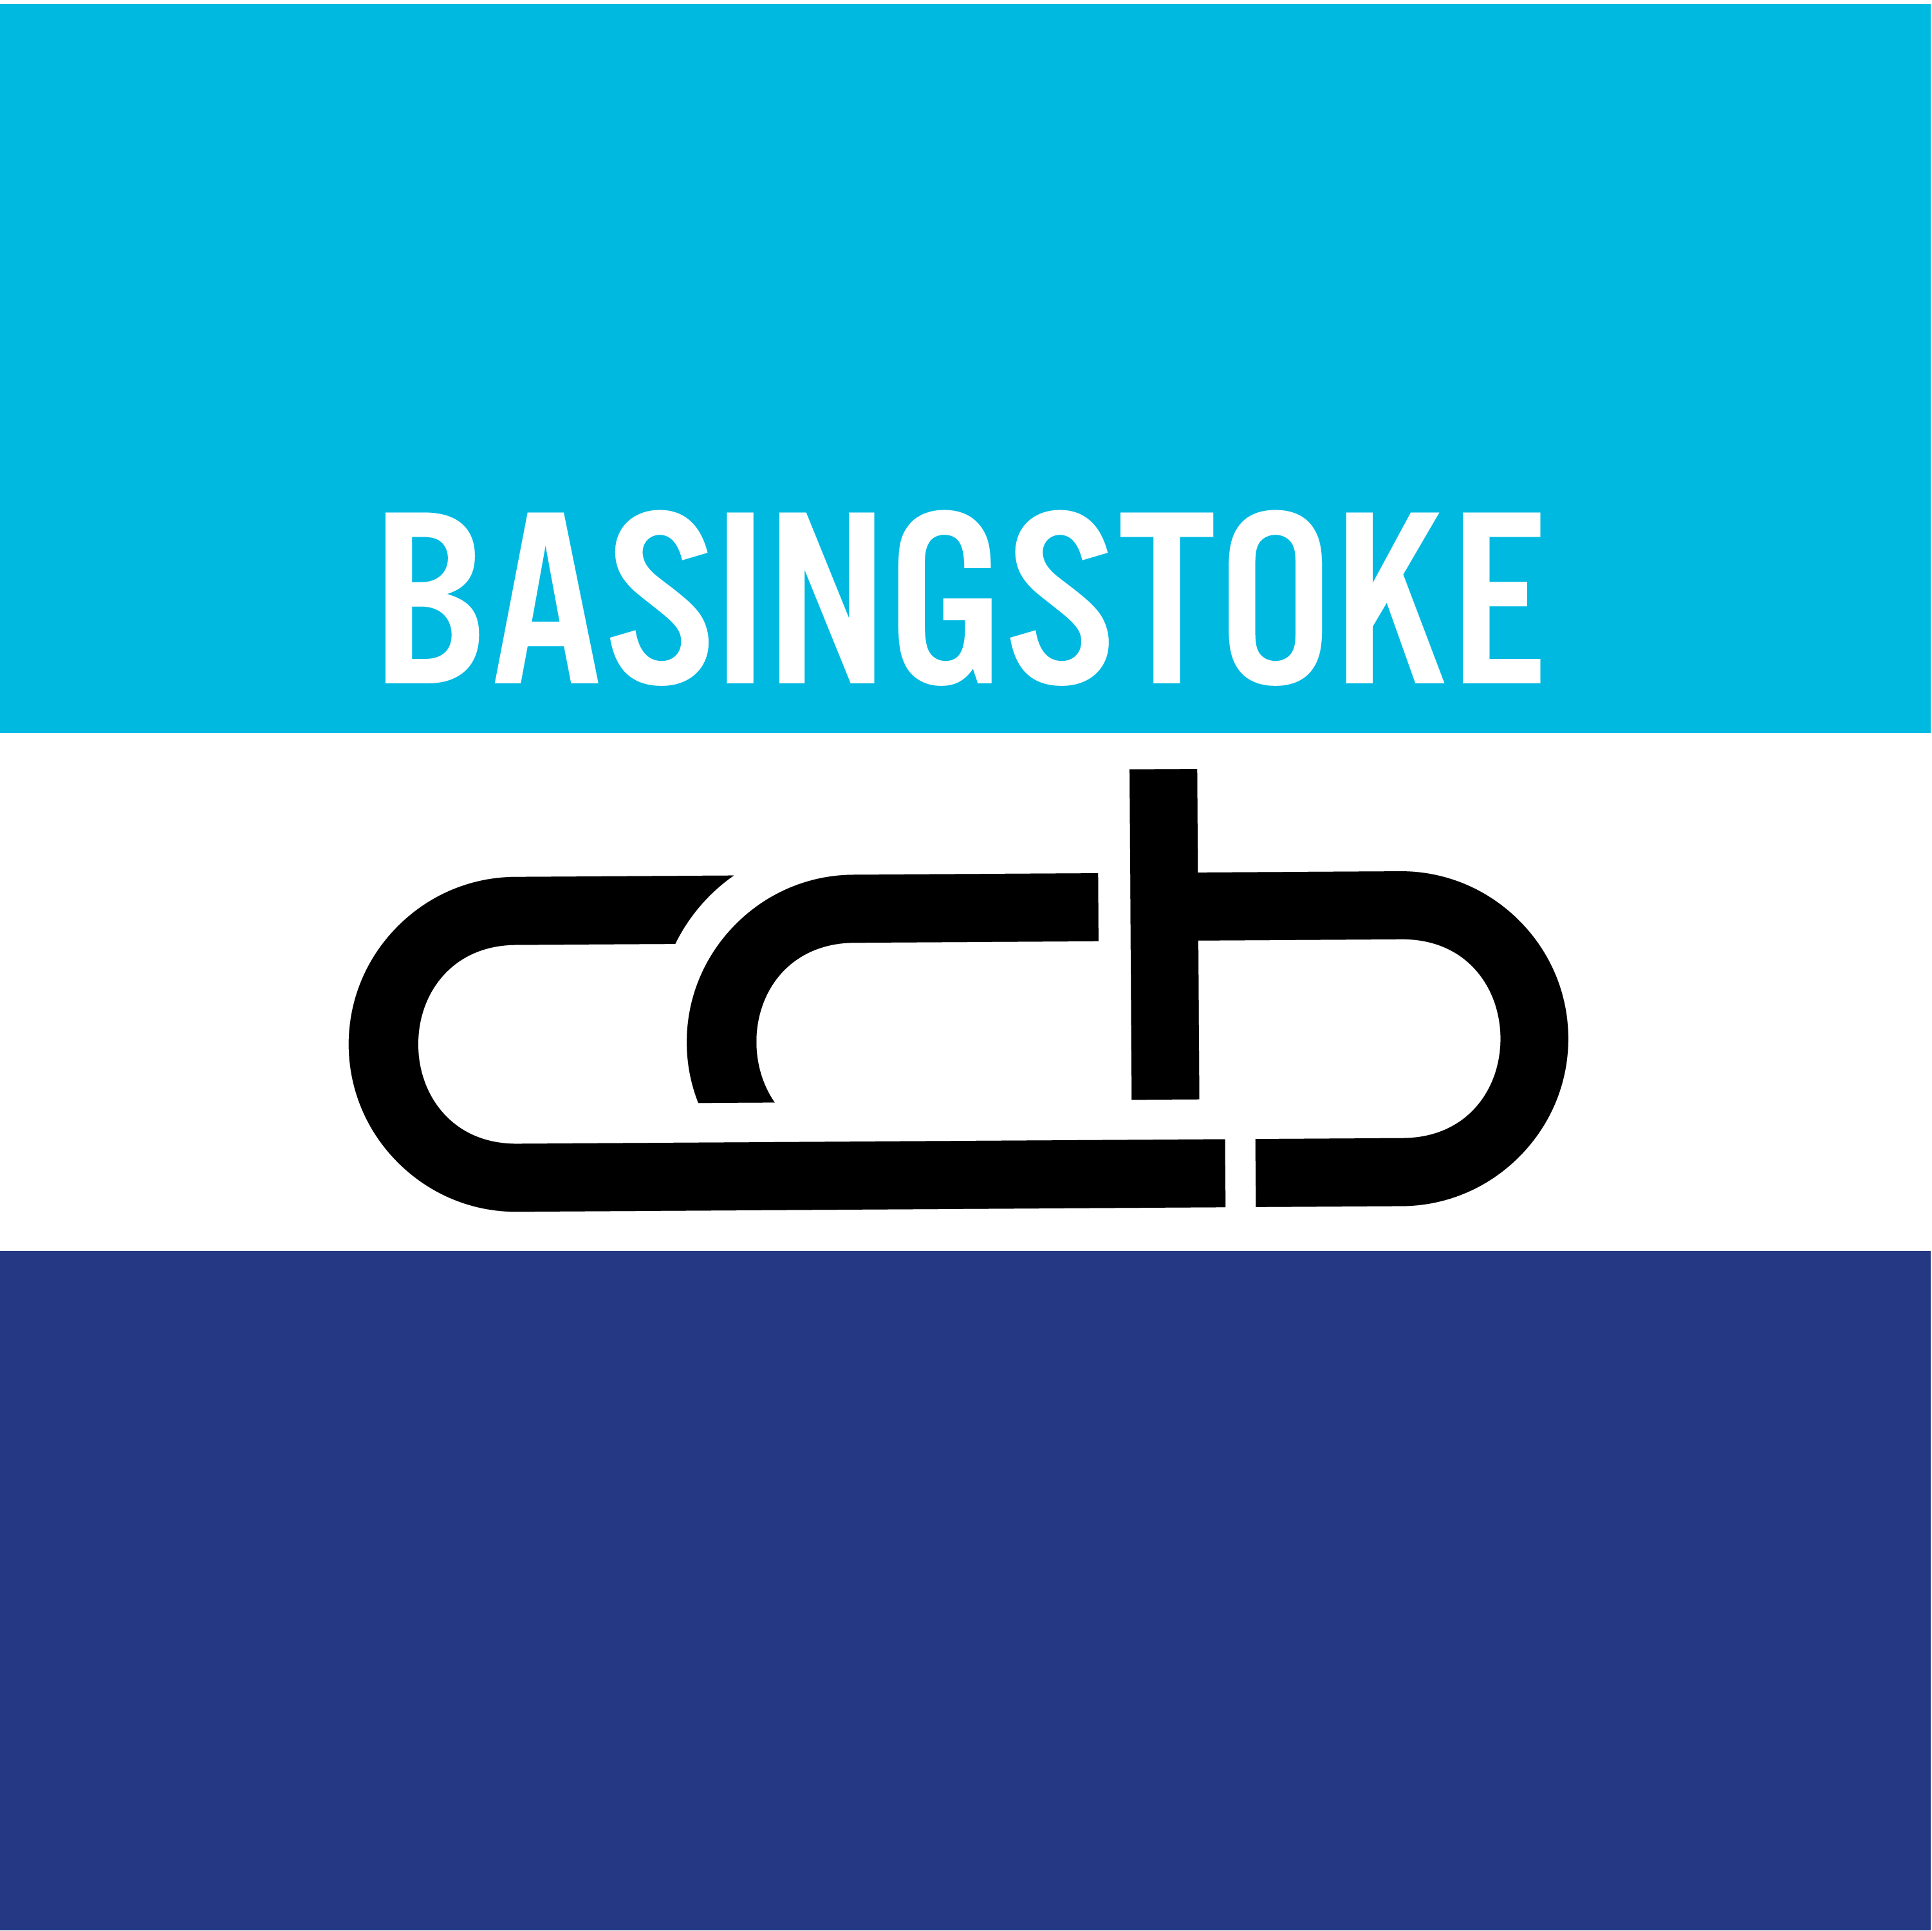 Club Image for CC BASINGSTOKE